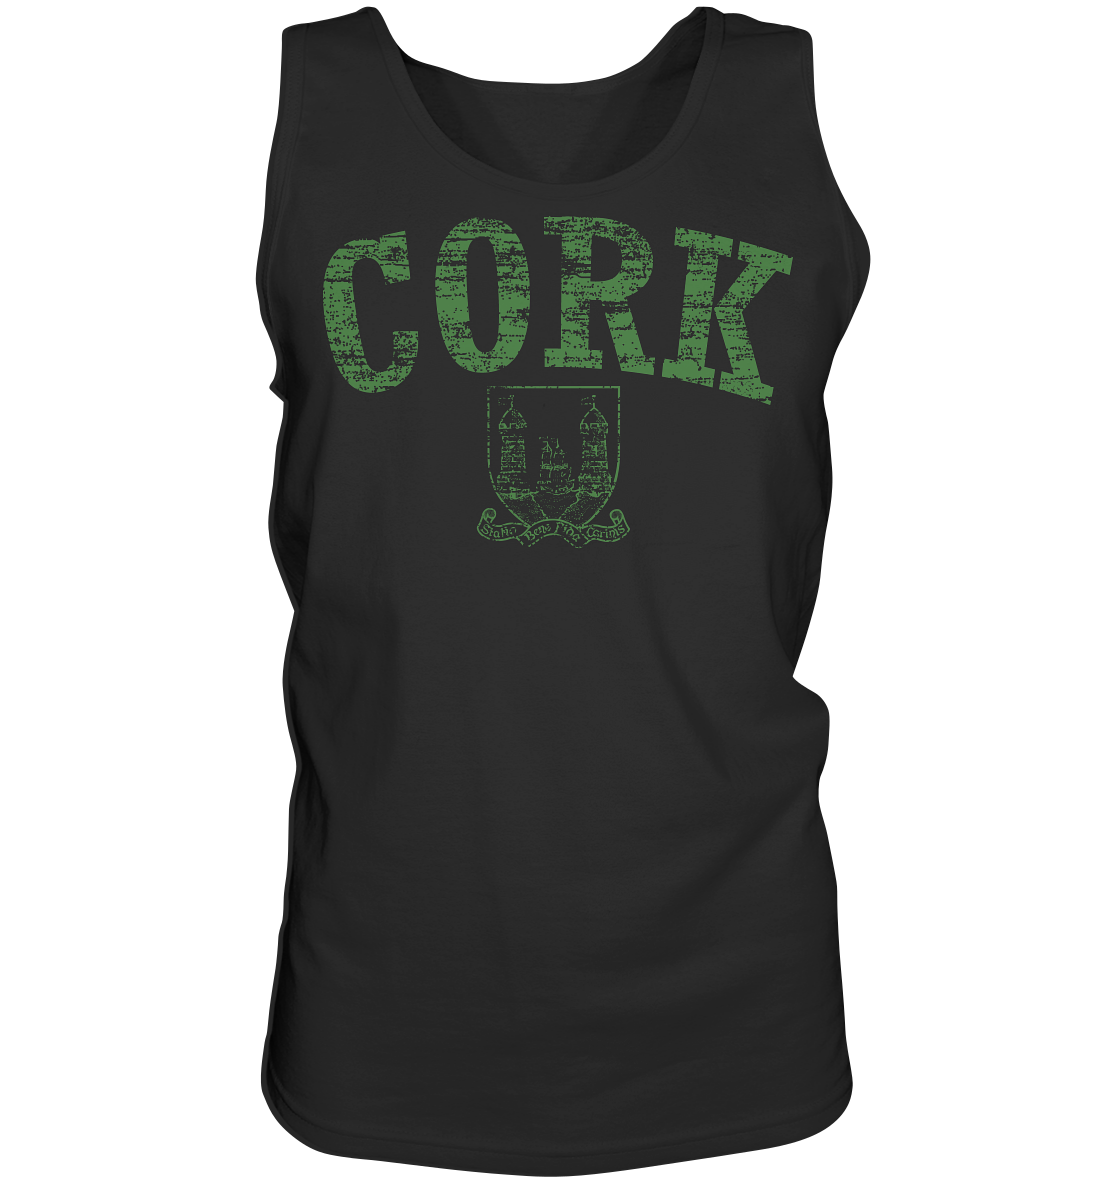 "Cork - Statio Bene Fida Carinis" - Tank-Top